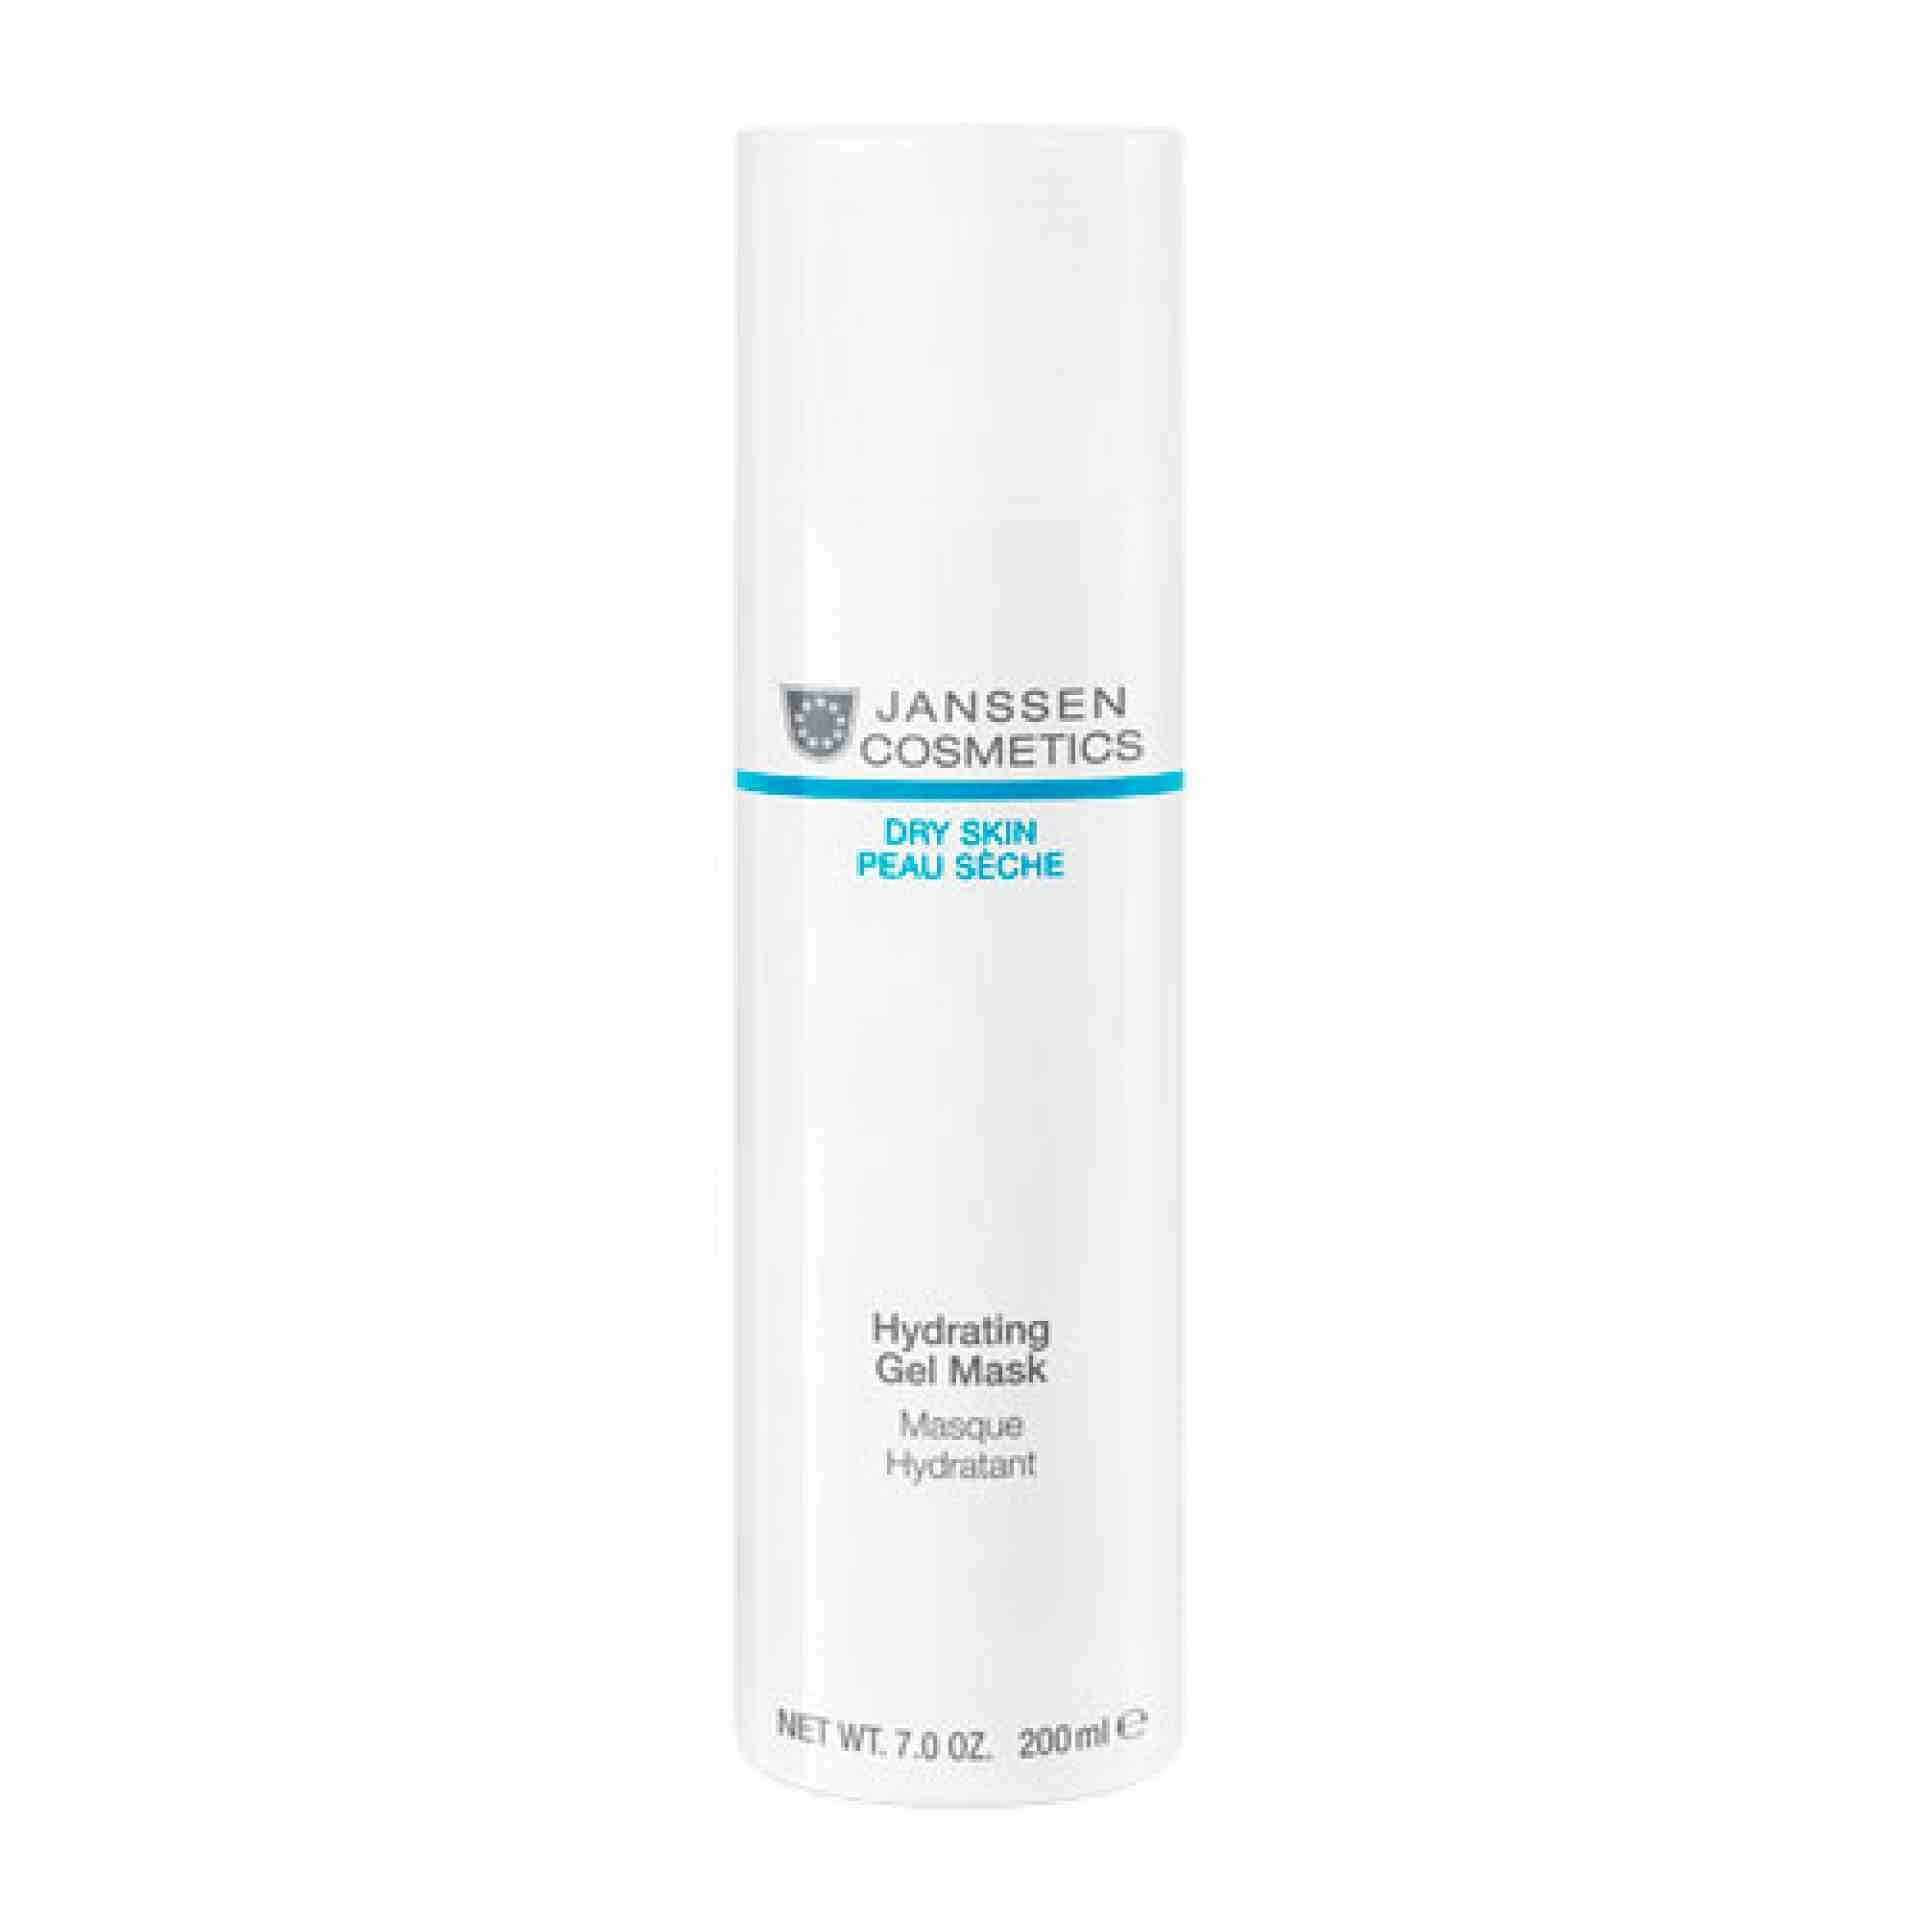 Dry Skin Hydrating Gel Mask+ 75ml Janssen Cosmetics®